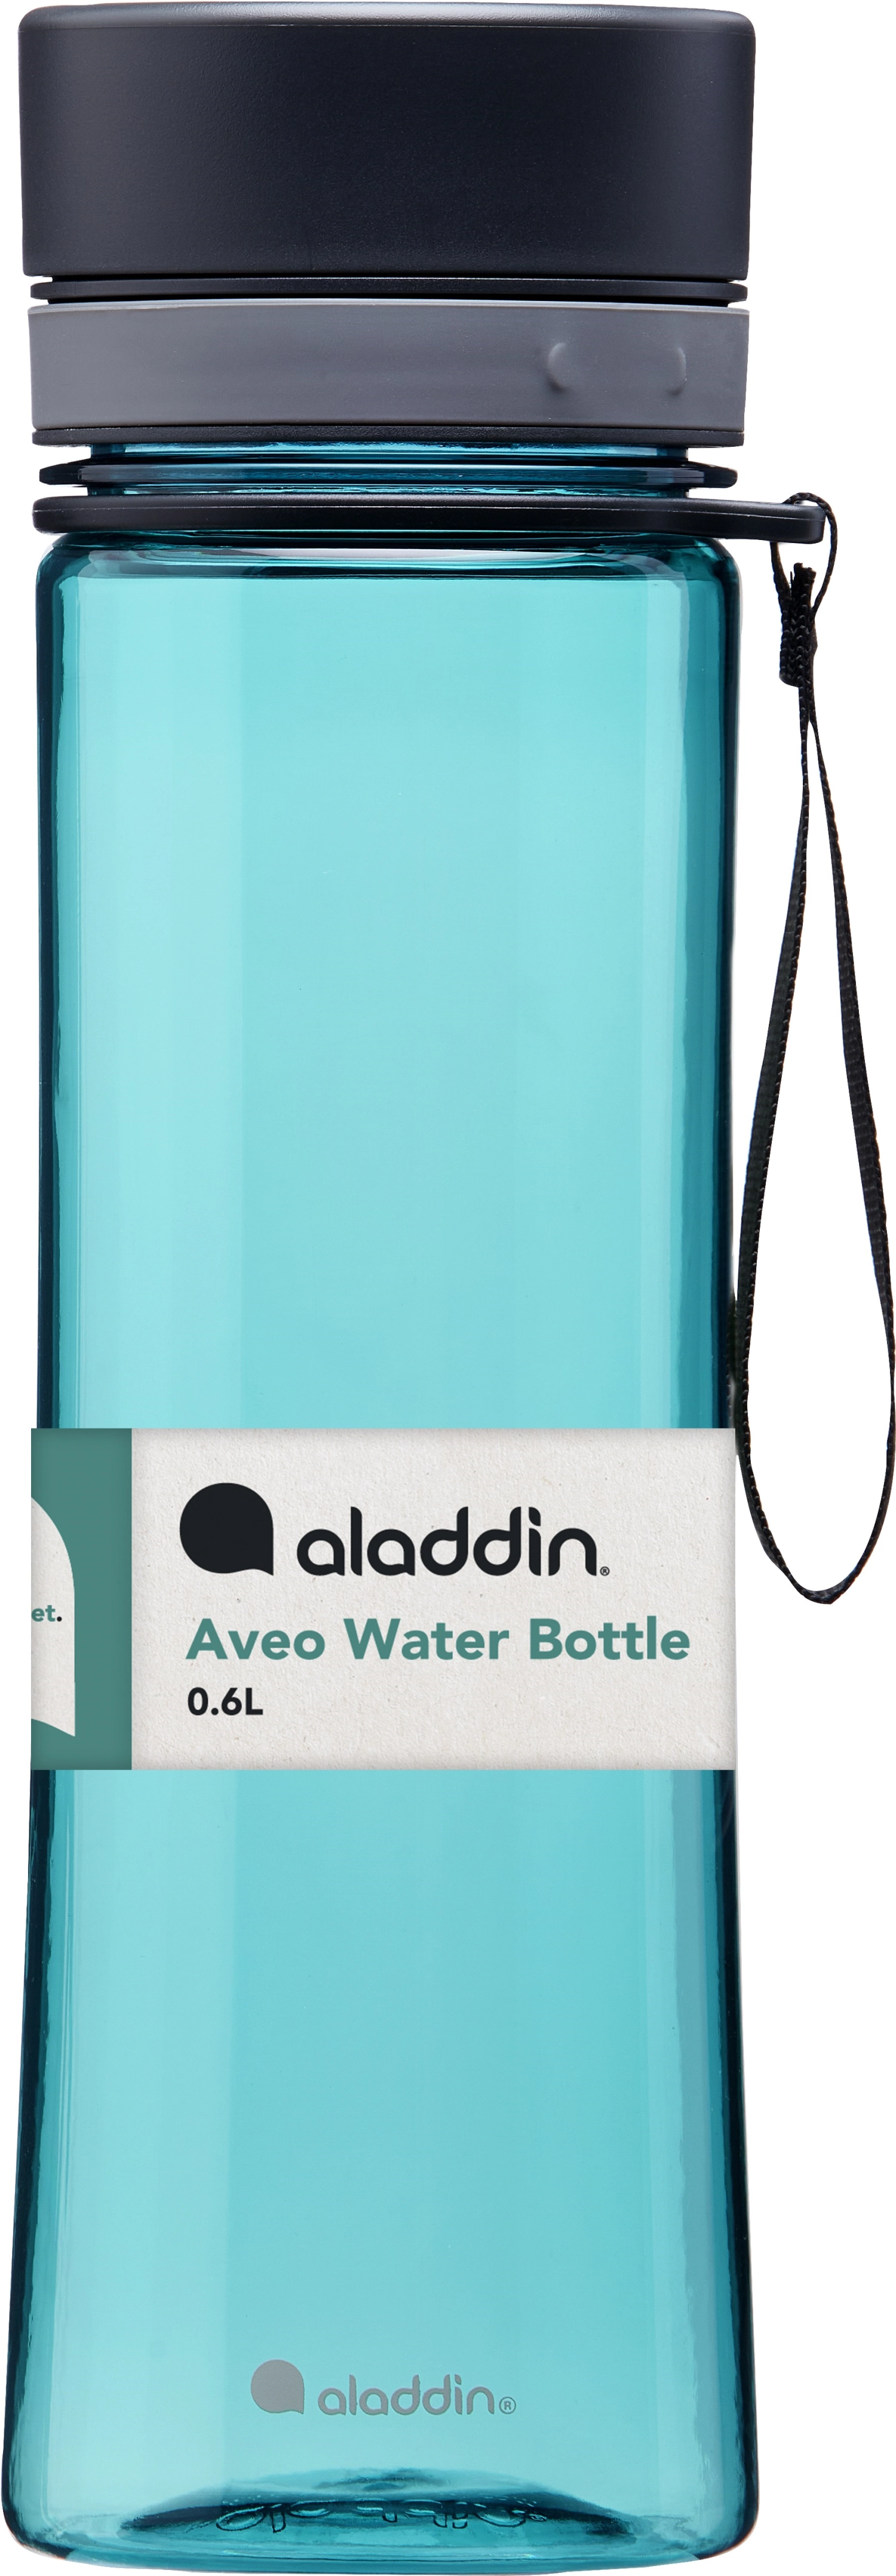 Aladdin aveo water bottle 0.6l aqua blue